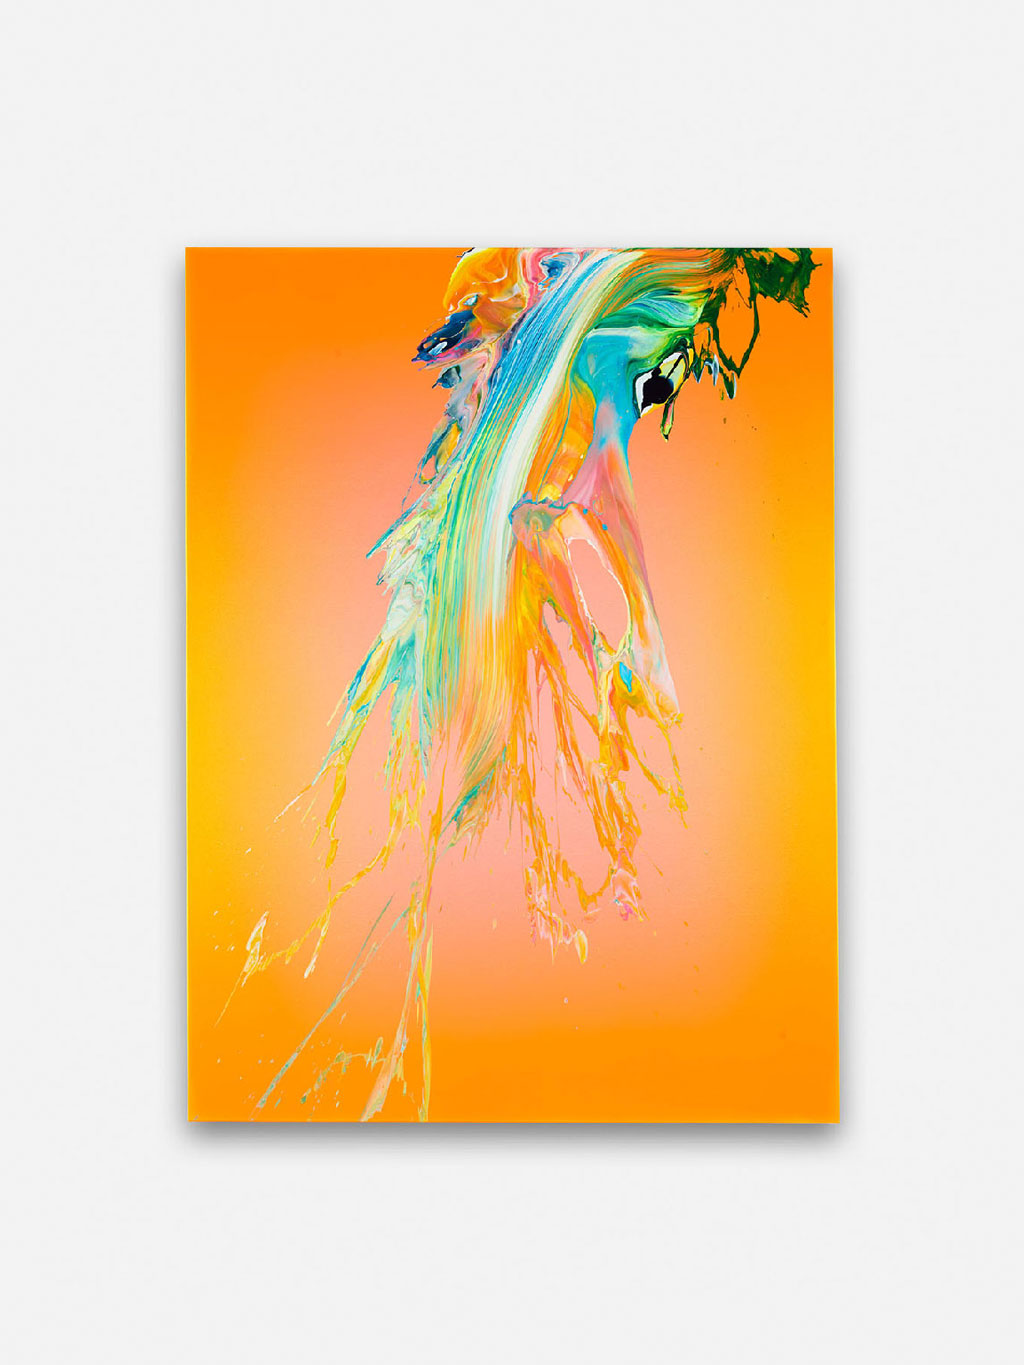 Yago Hortal - SP217. 2018. Acrylic on linen. 130 x 97 cm